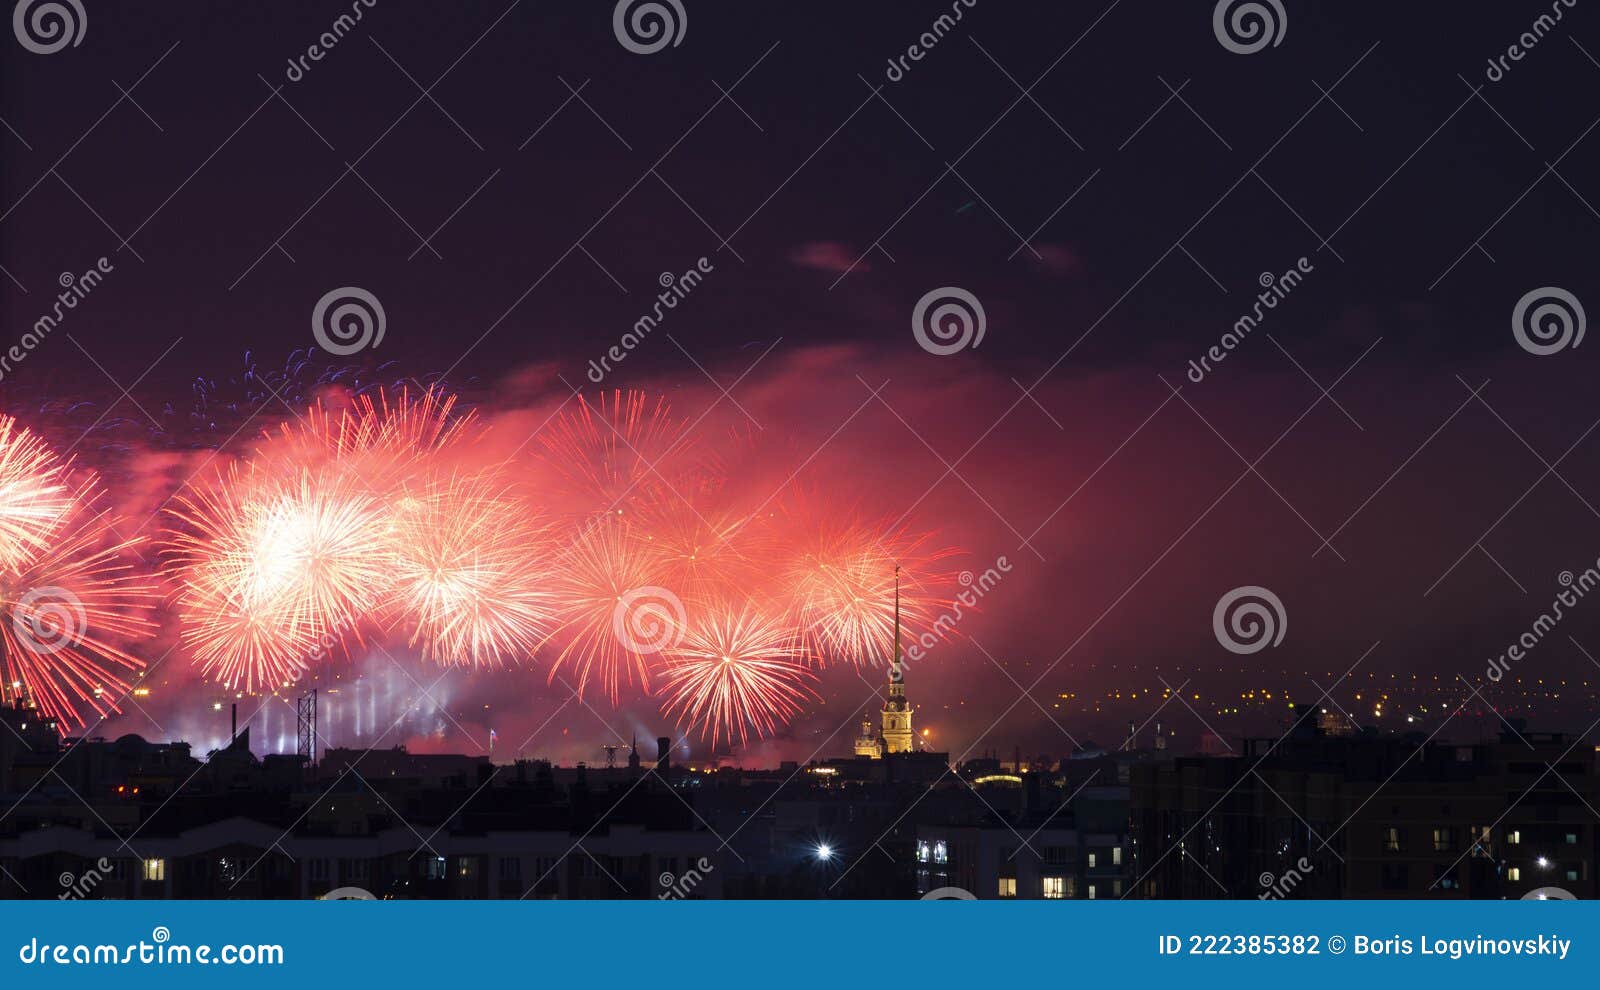 salute fireworks celebratory gunfire in city at night